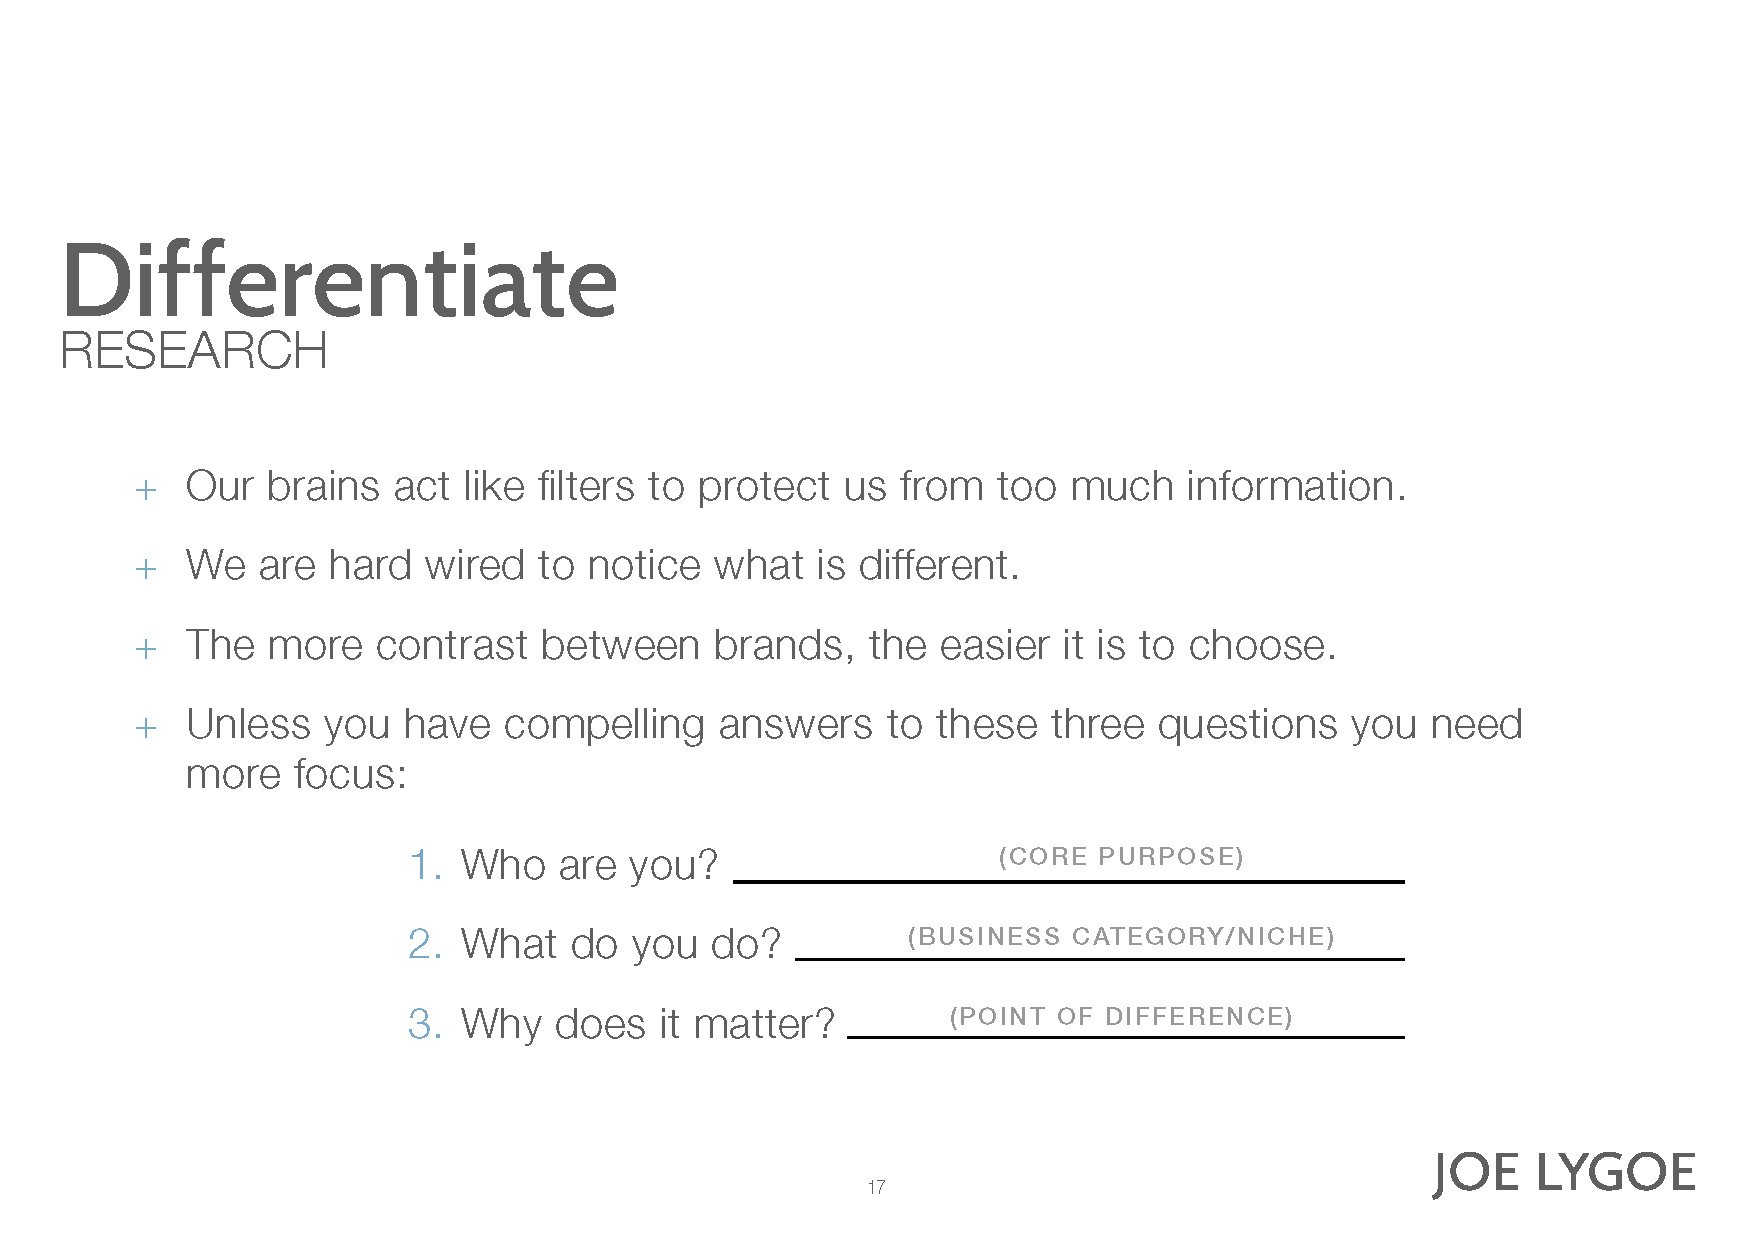 Joe Lygoe - Brand Strategy v01_Page_17.jpg